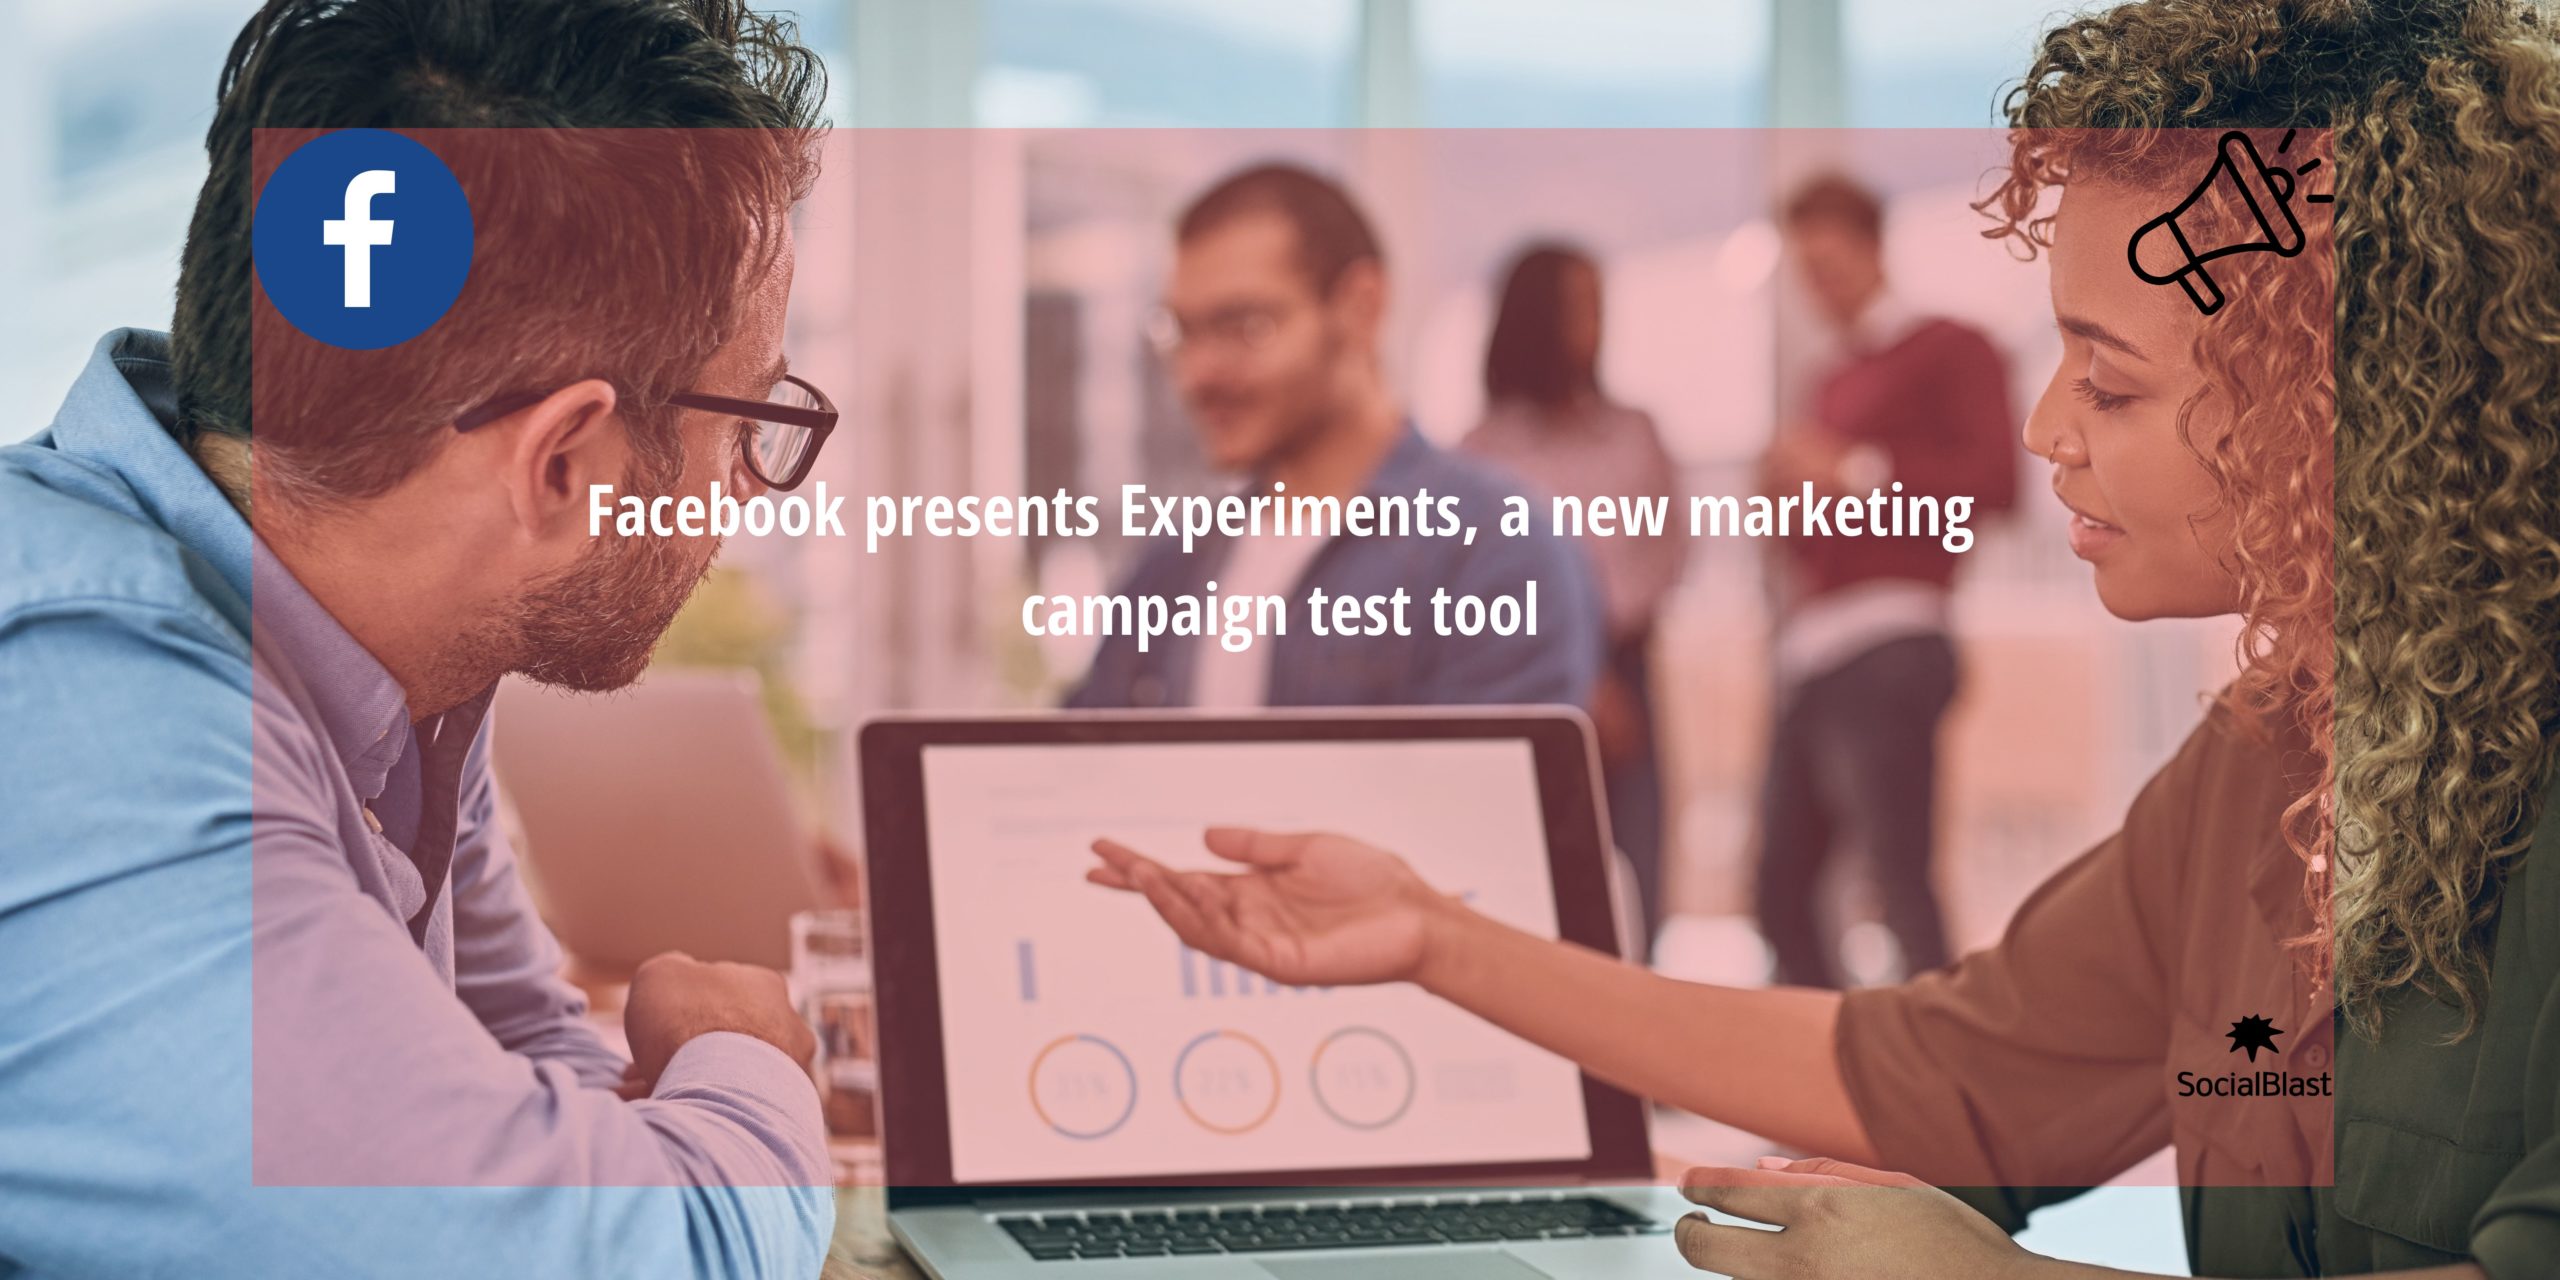 Facebook presents Experiments, a new marketing campaign test tool